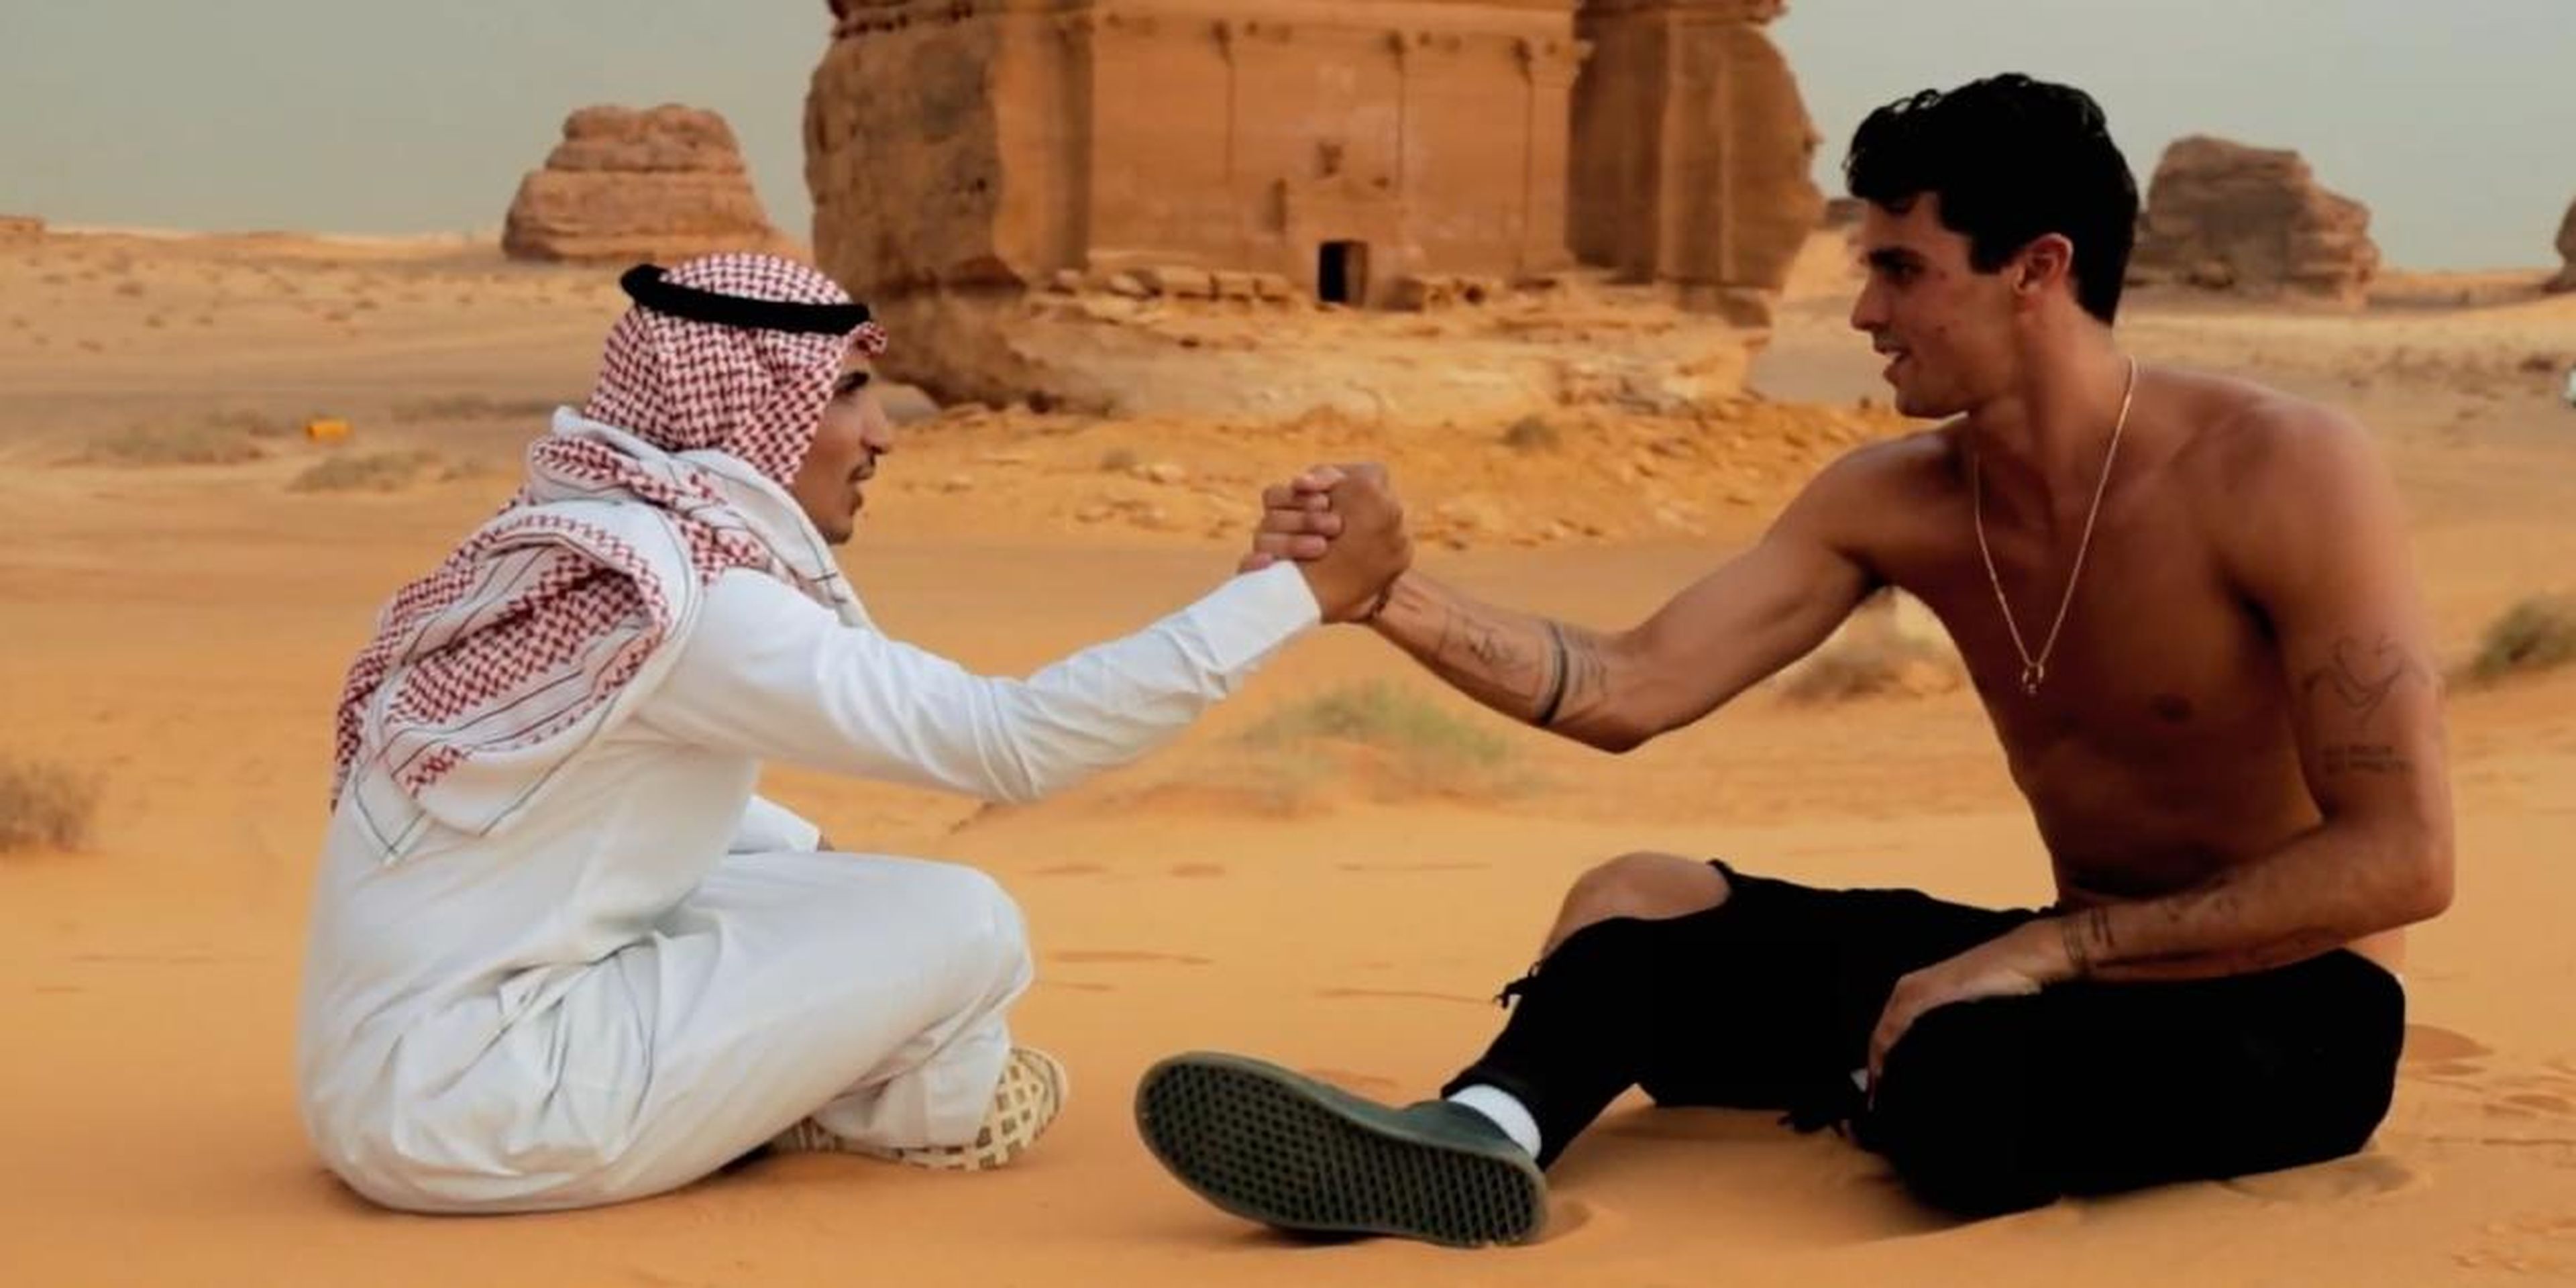 The Instagram star Jay Alvarrez with a Saudi man wearing a keffiyeh and thawb at Saudi Arabia's heritage center of Mada'in Saleh.